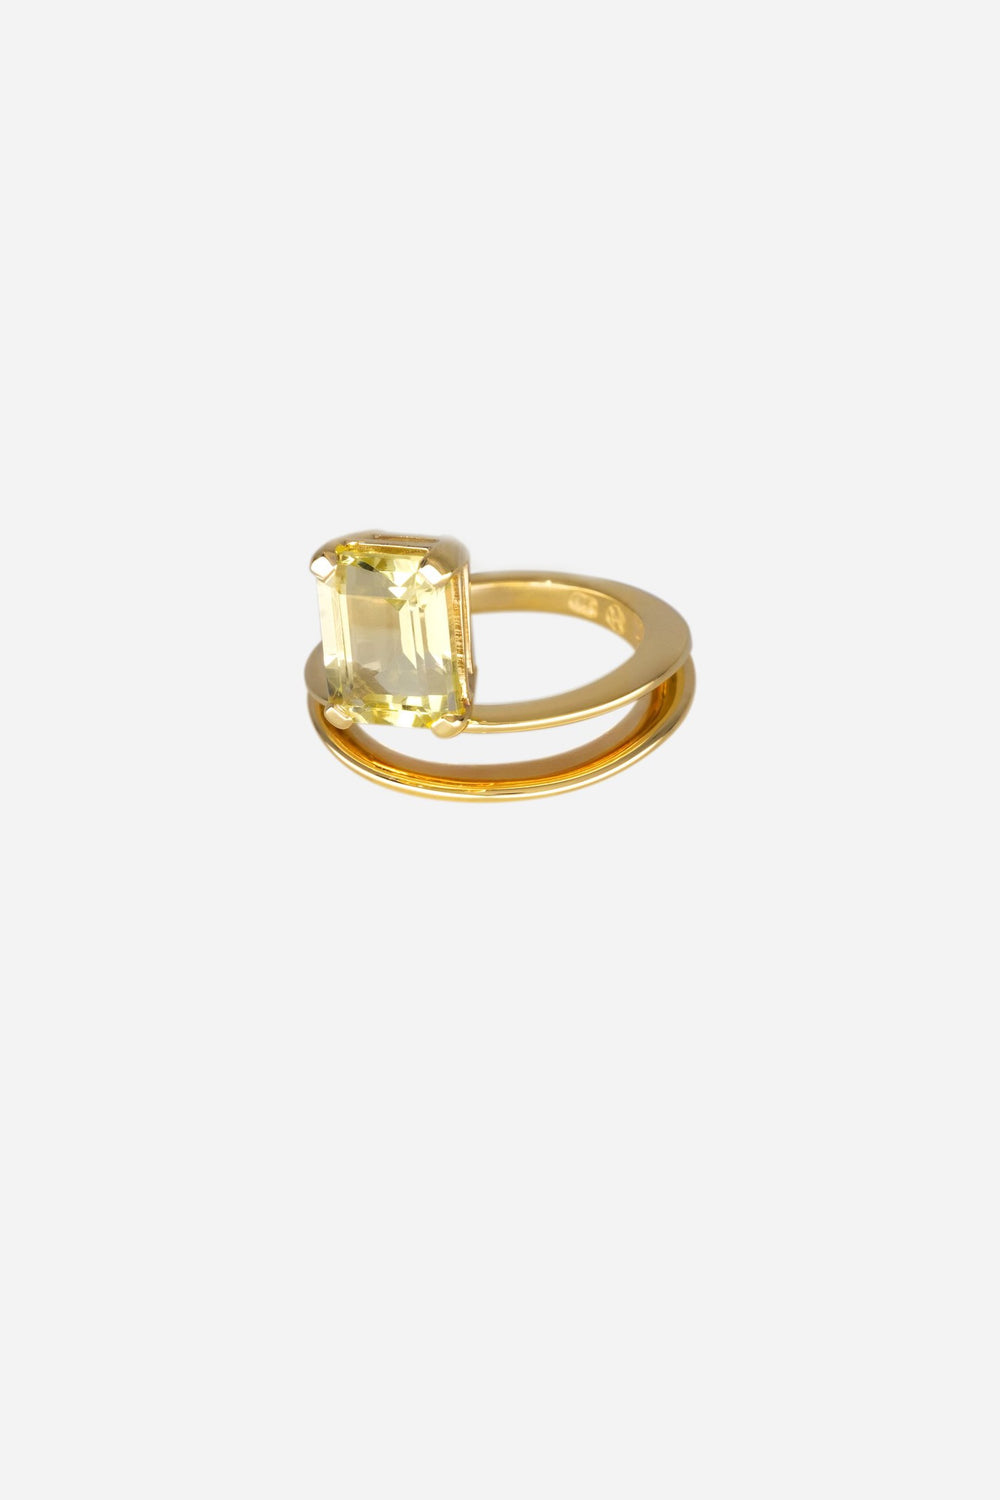 Double Band Lemon Quartz Ring | 9K Yellow Gold